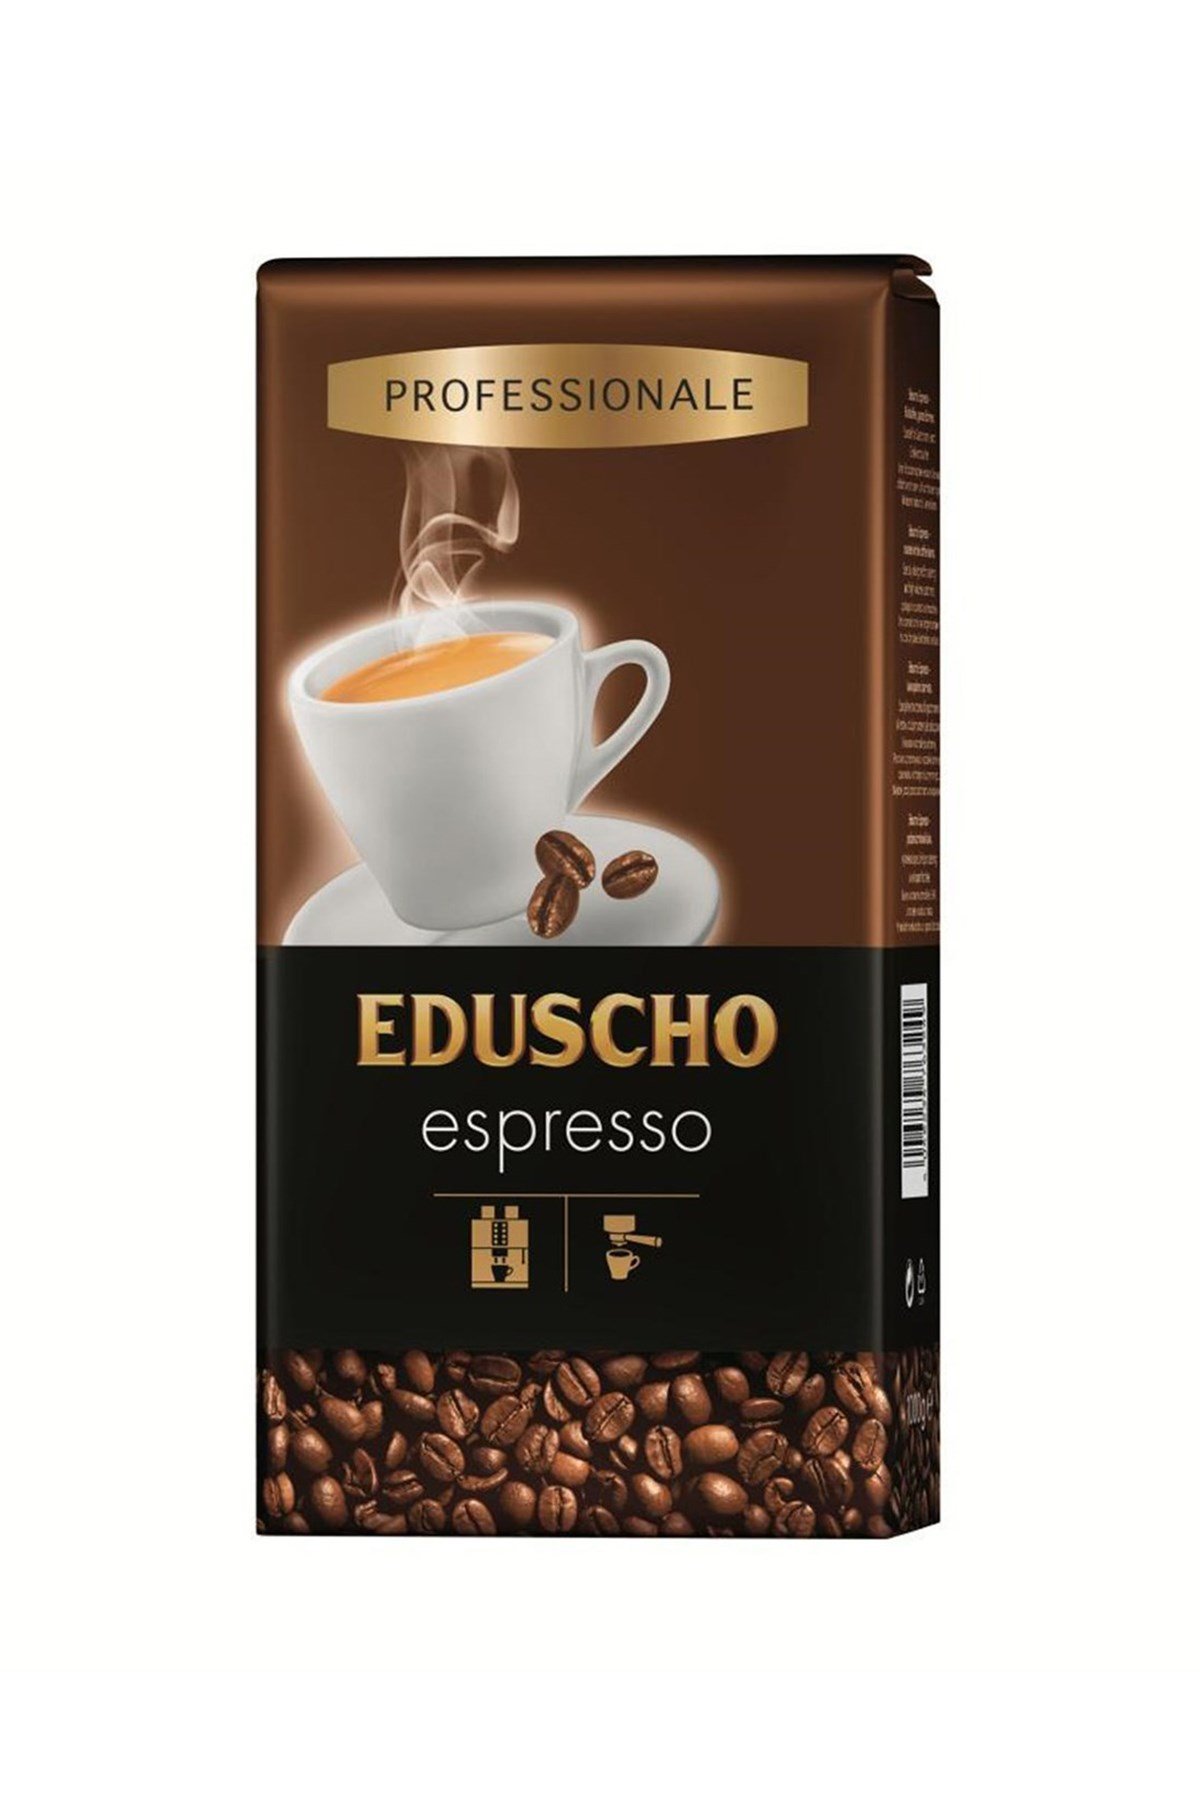 Tchibo Eduscho Espresso Profesional Çekirdek Kahve 1 kg - Sinerjikgida.com